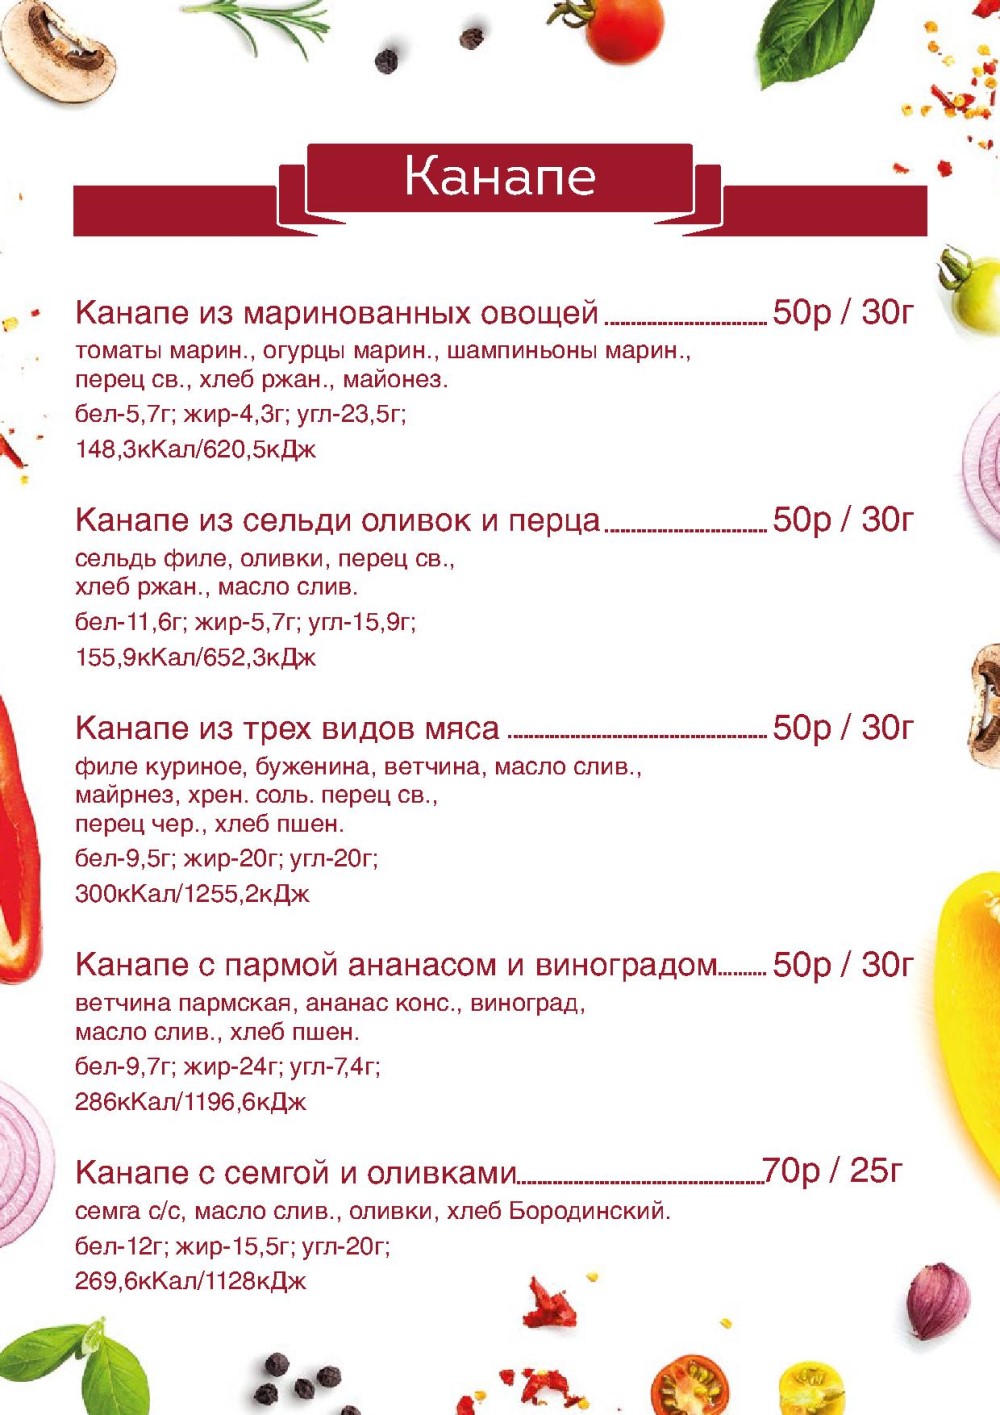 Блюда на заказ в Лэнде г. Санкт-Петербург. Каталог акций с ценами на товары